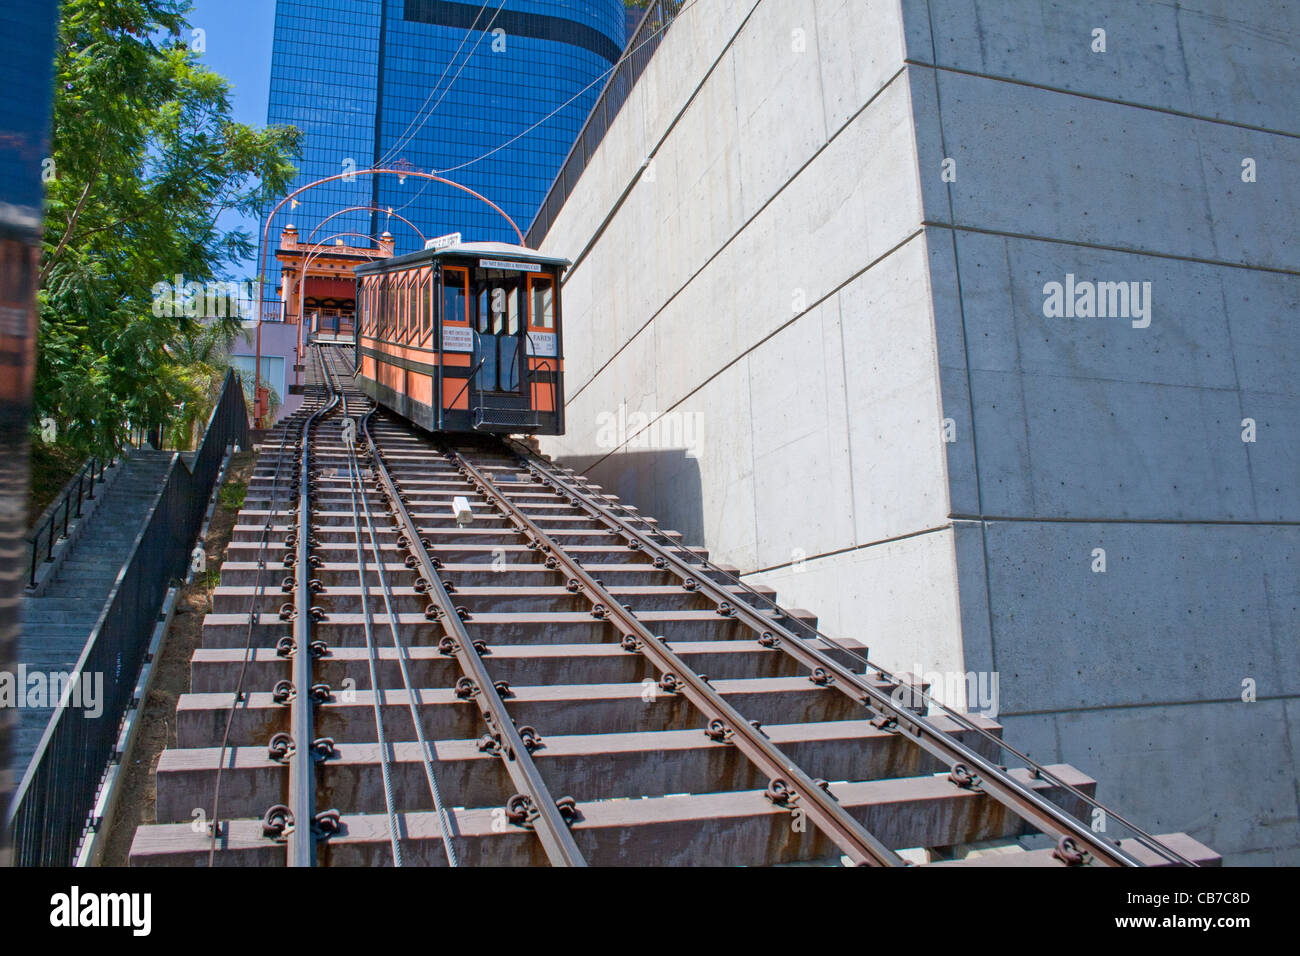 Angels Flight Funicular Railway runs between Hill Street and California Plaza, Bunker Hill, downtown Los Angeles, California Stock Photo